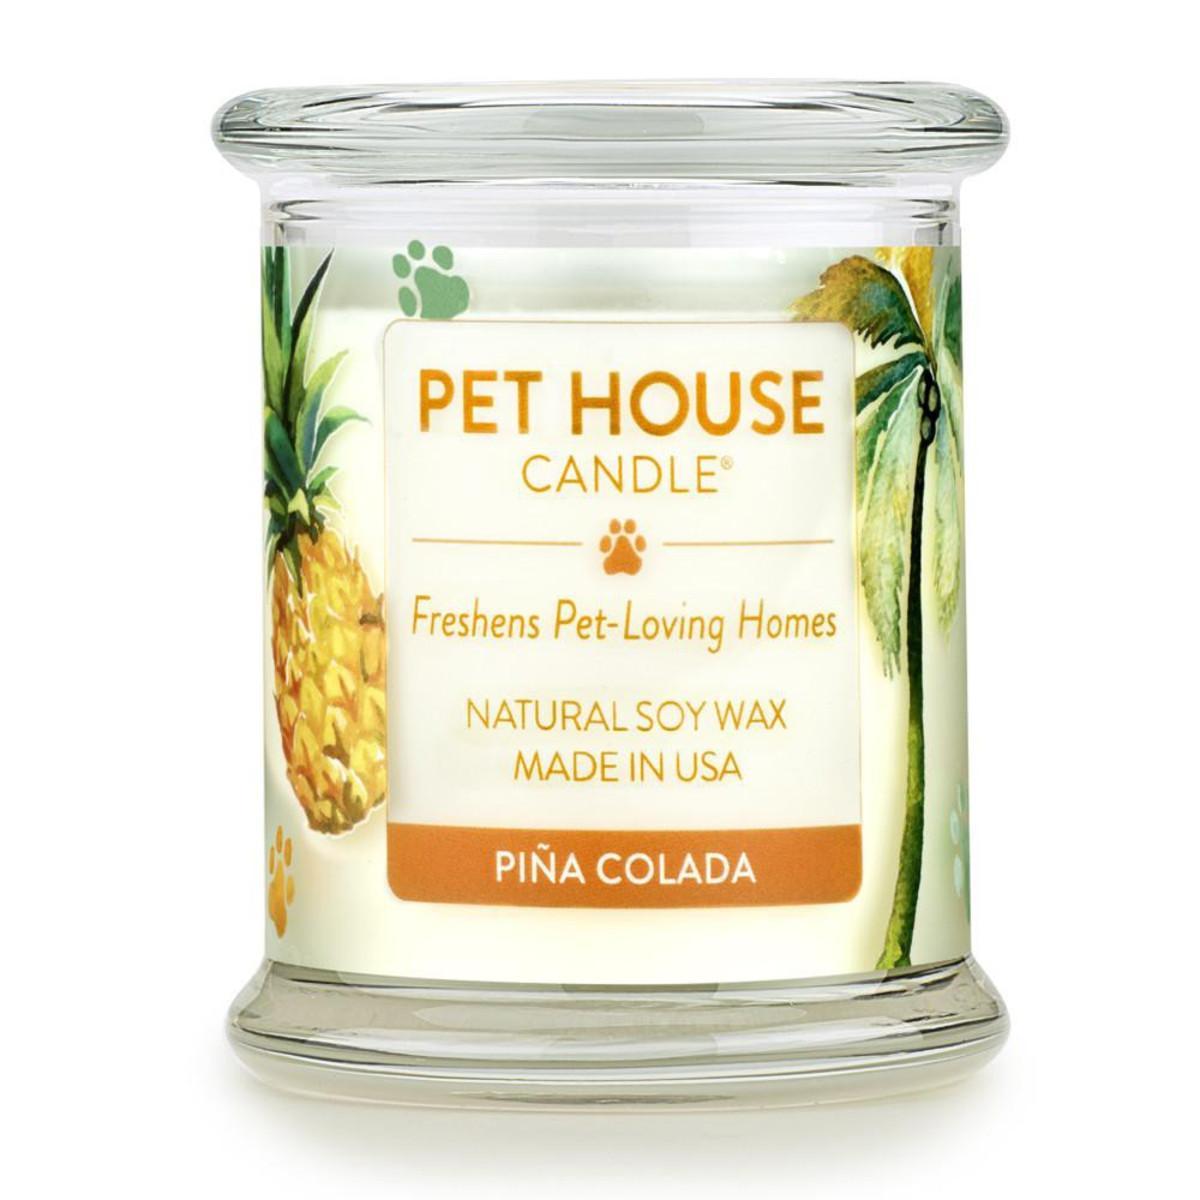 Pet House Pina Colada Candle